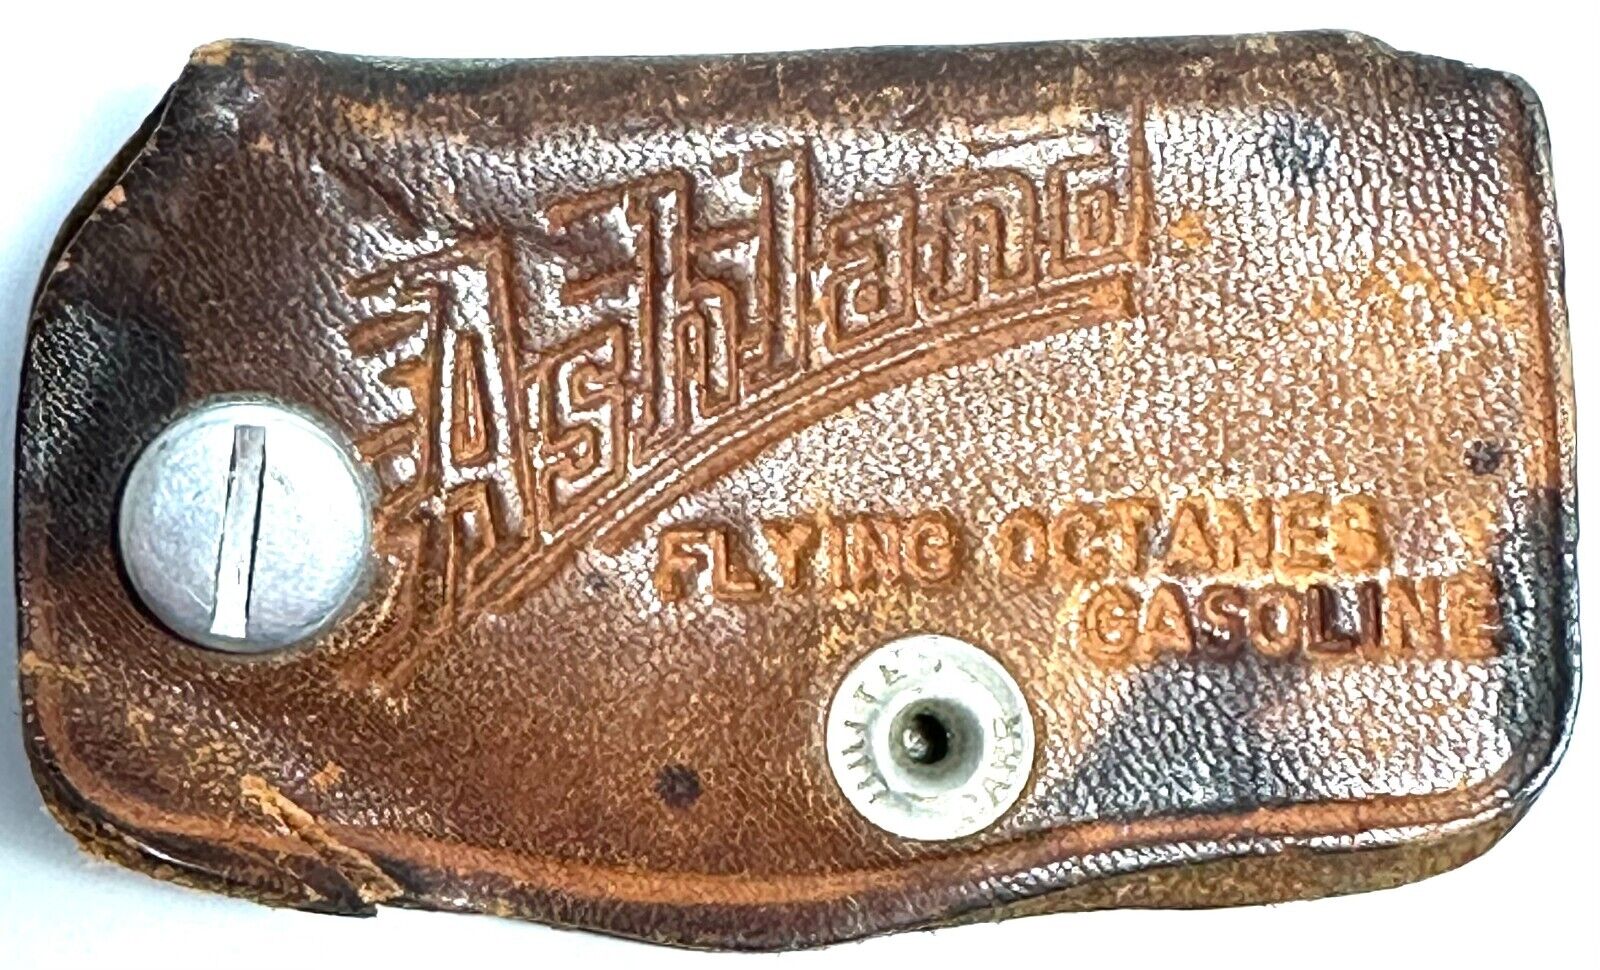 Ashland Flying Octanes Gasoline Stamped Leather Key Holder Snap Closure